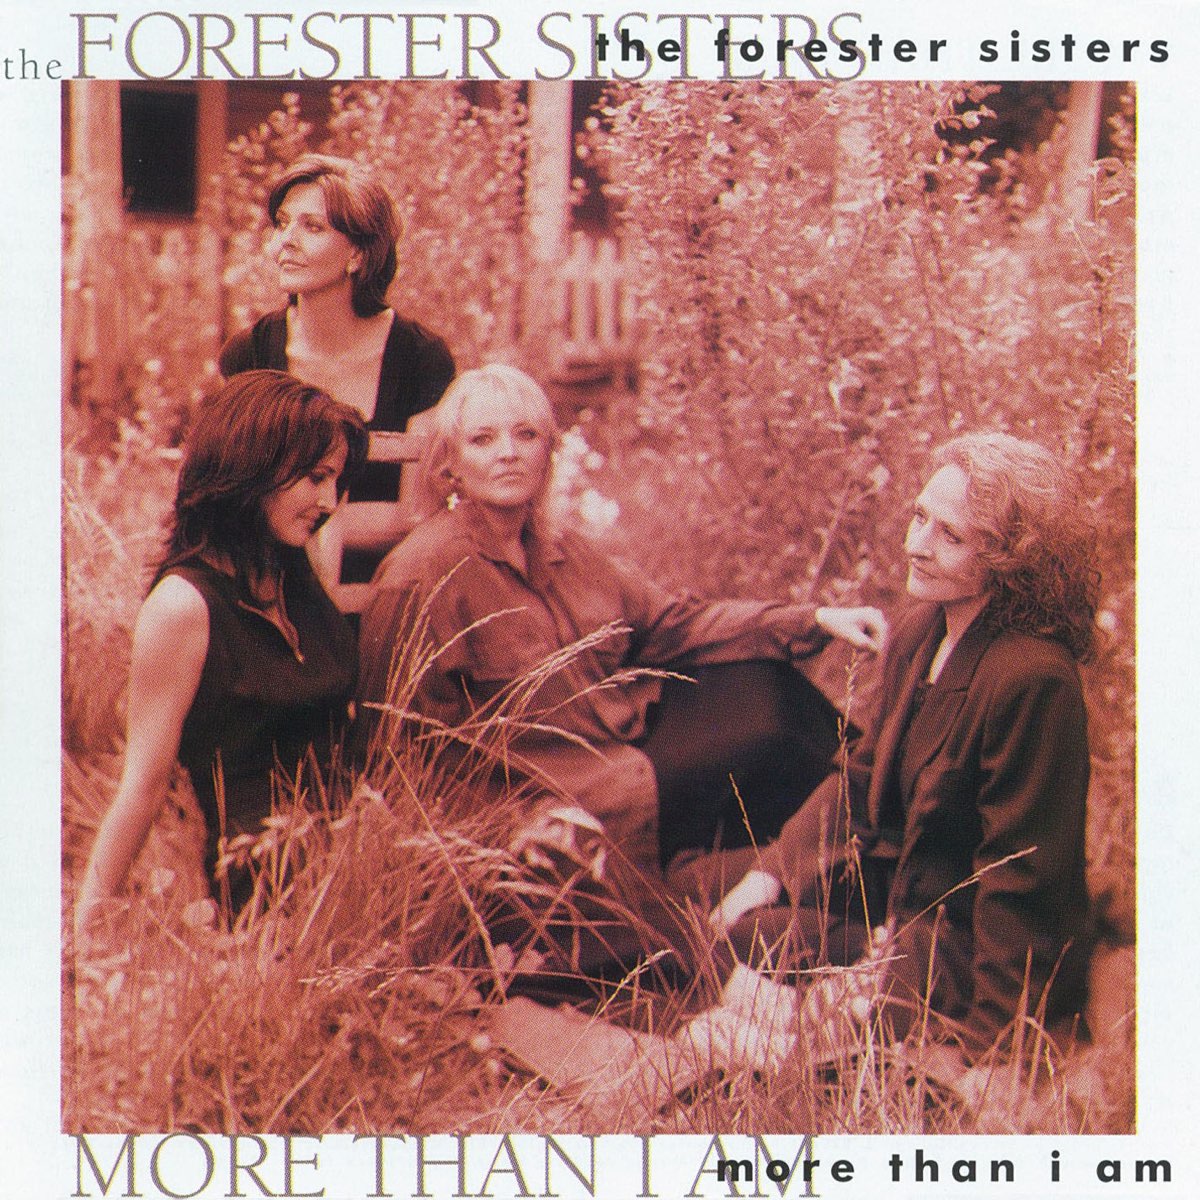 Sister no more. The Passmore sisters. Barry sisters фото. Vakili sisters.